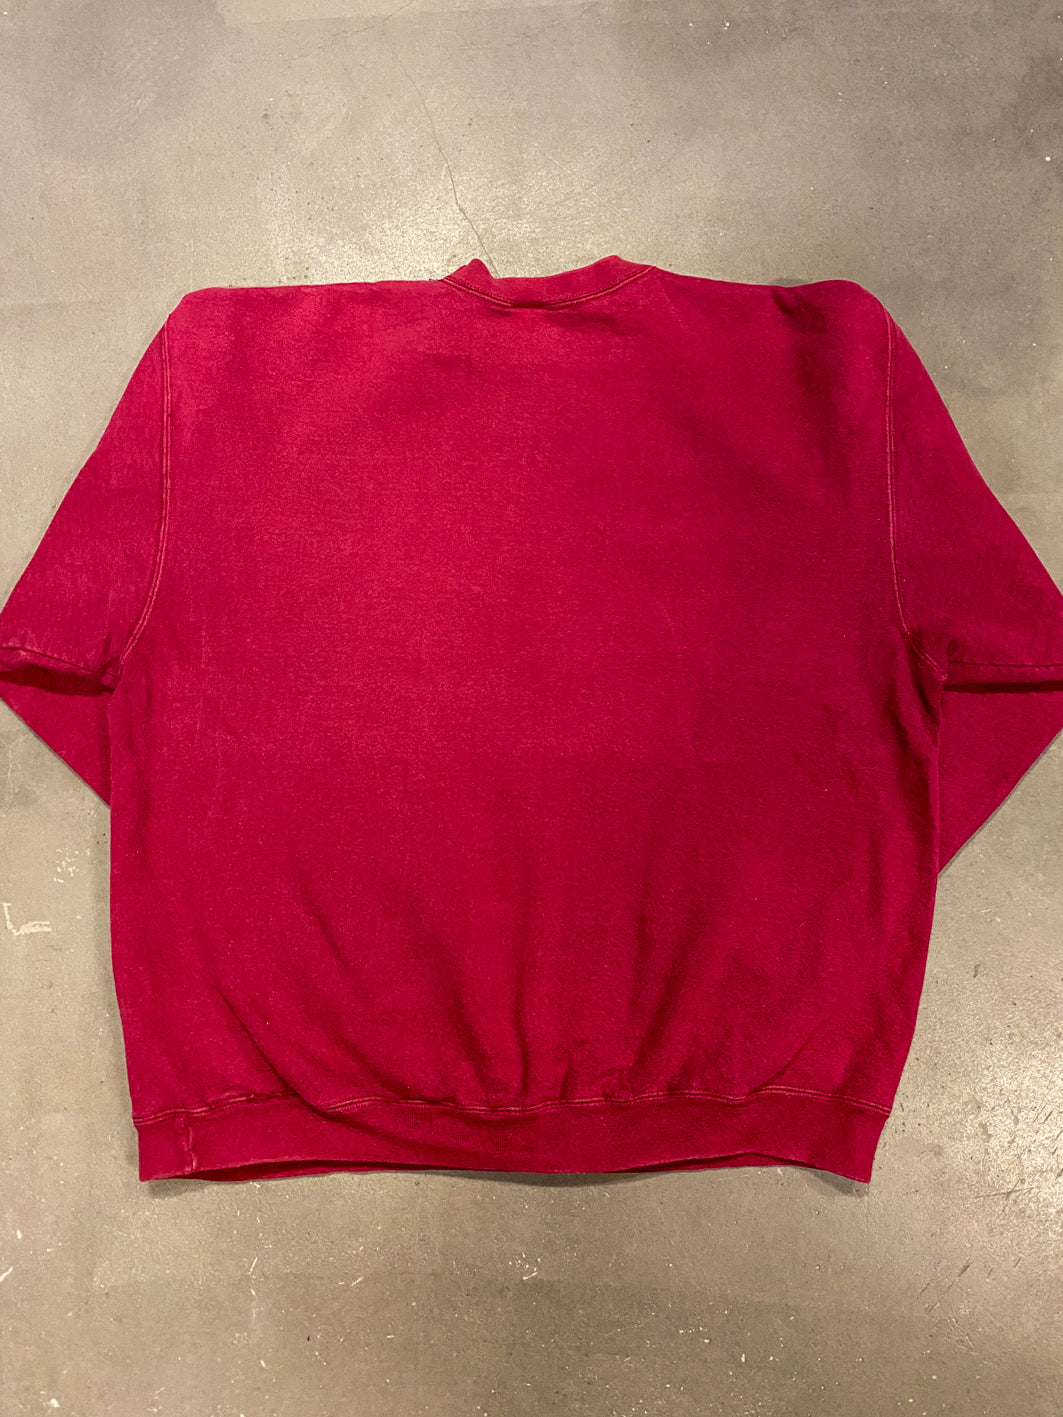 Reworked FOTL Sweatshirt in Red Spaced Out Print